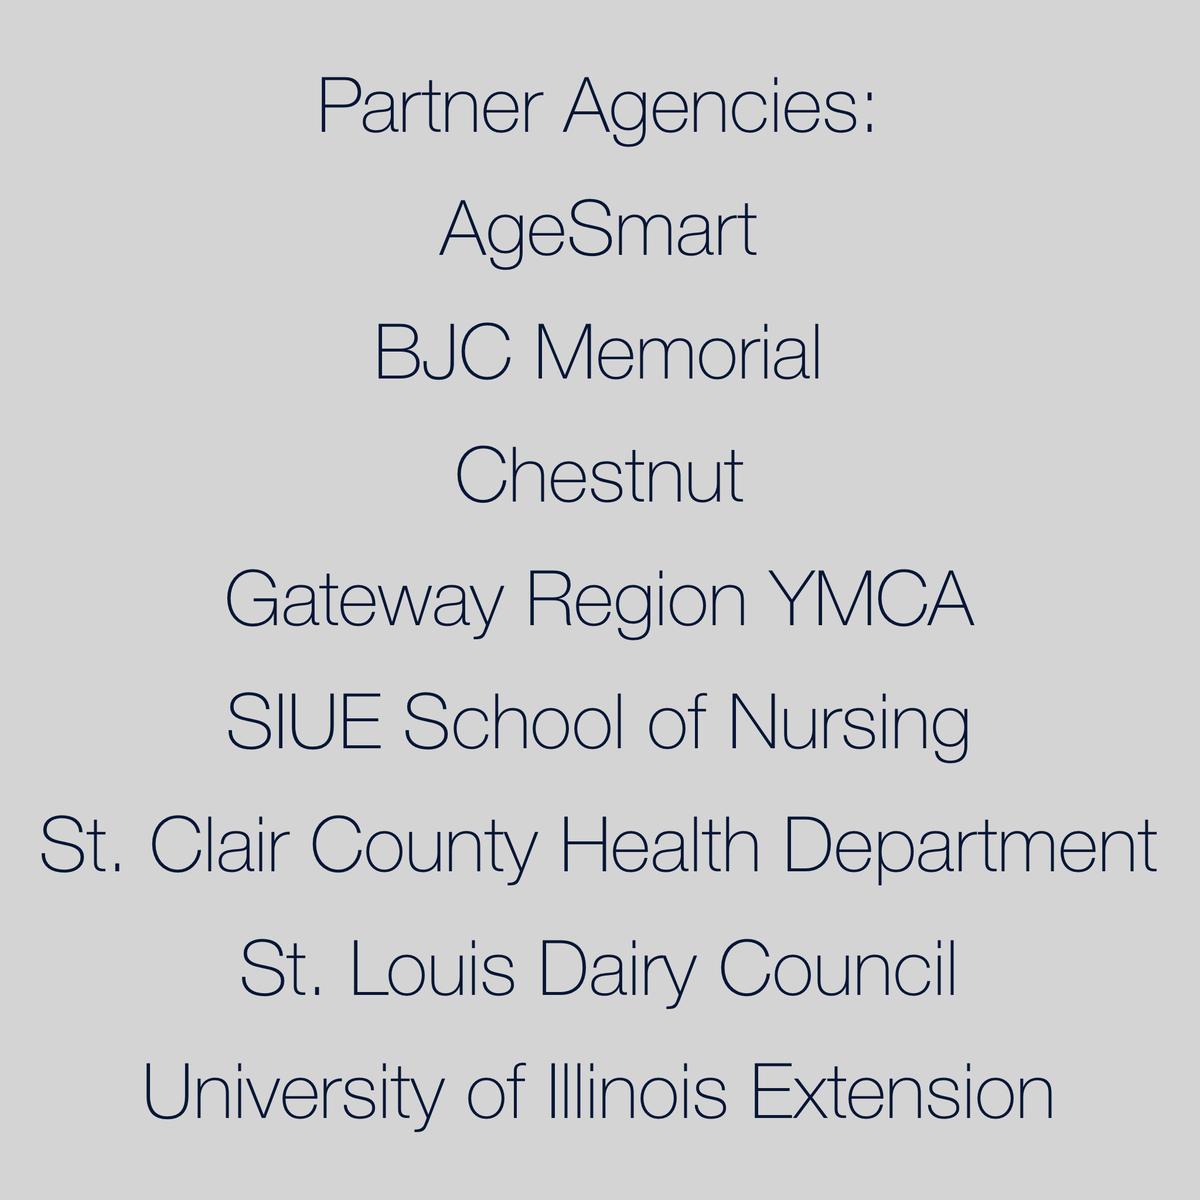 Participating Partner Agencies